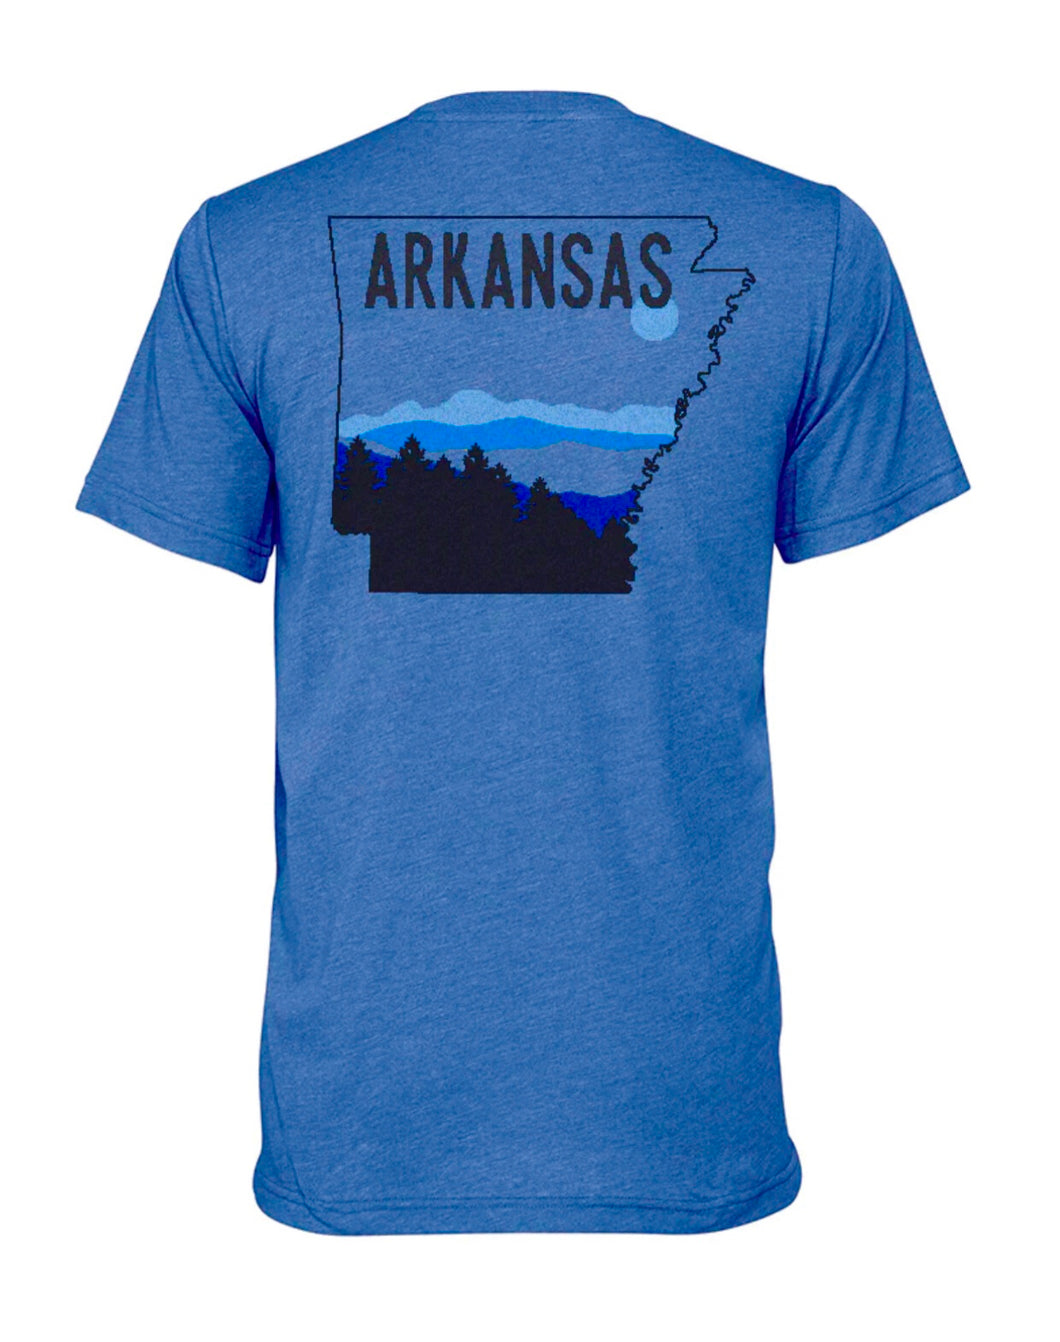 Arkansas Night Sky T-shirt